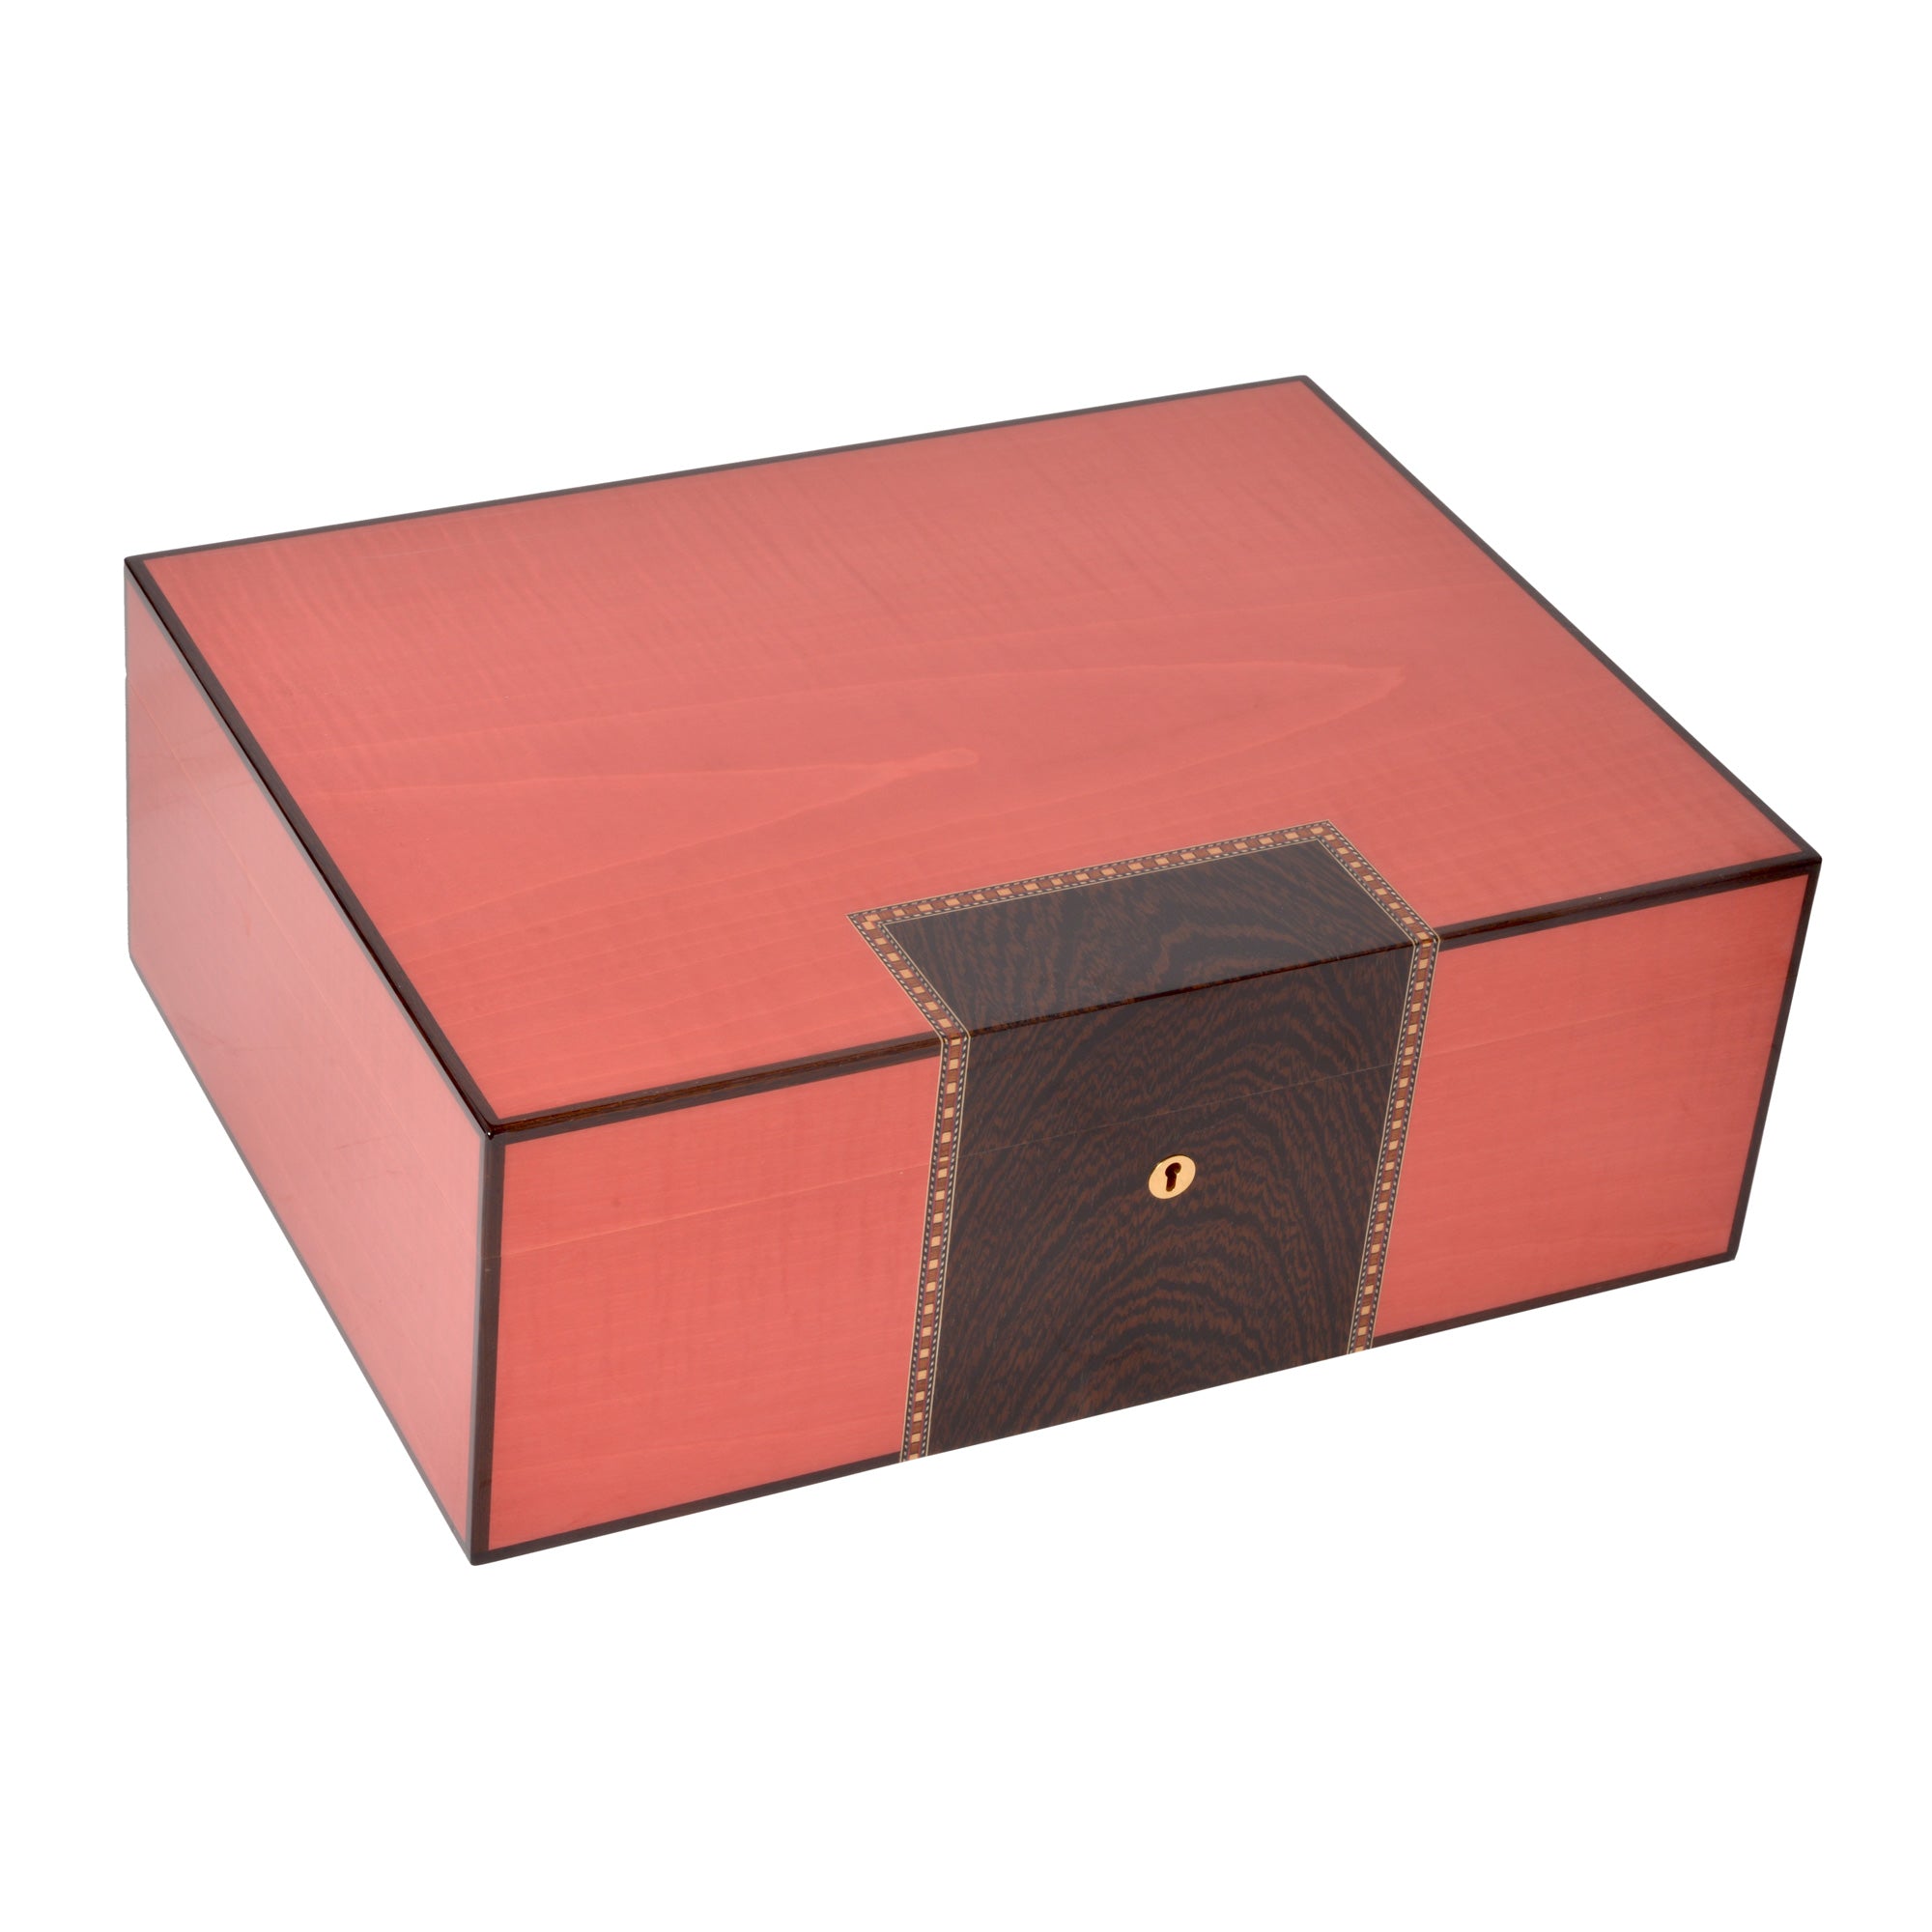 "Vista" - Old pink jewelry box - Large size